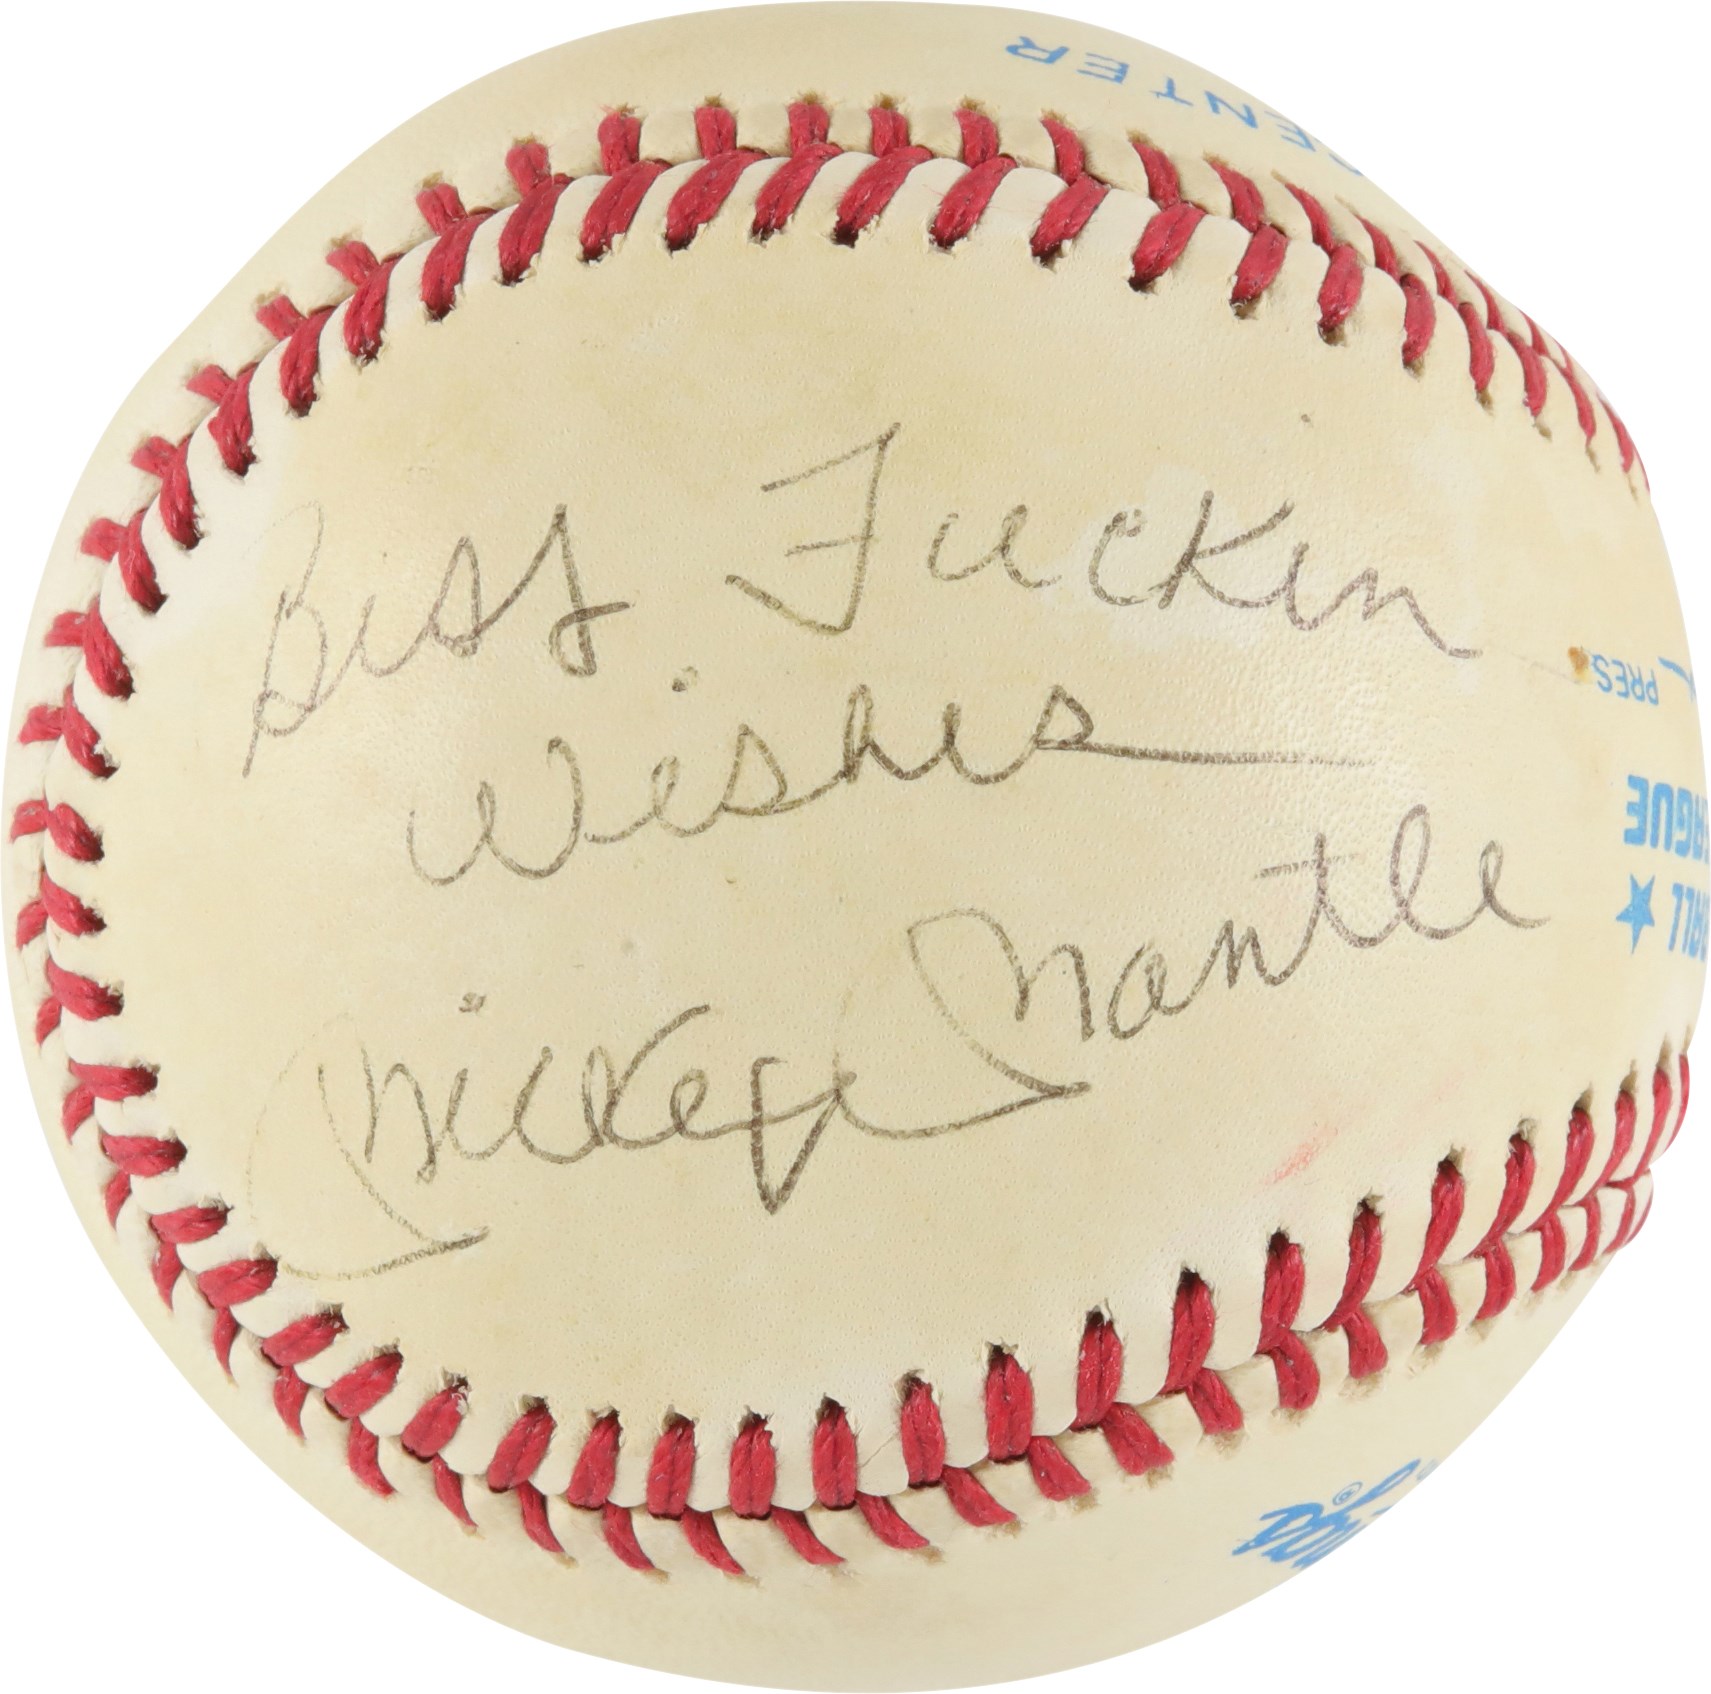 Baseball Autographs - Mickey Mantle "Best Fuckin Wishes" Single-Signed Baseball (PSA)